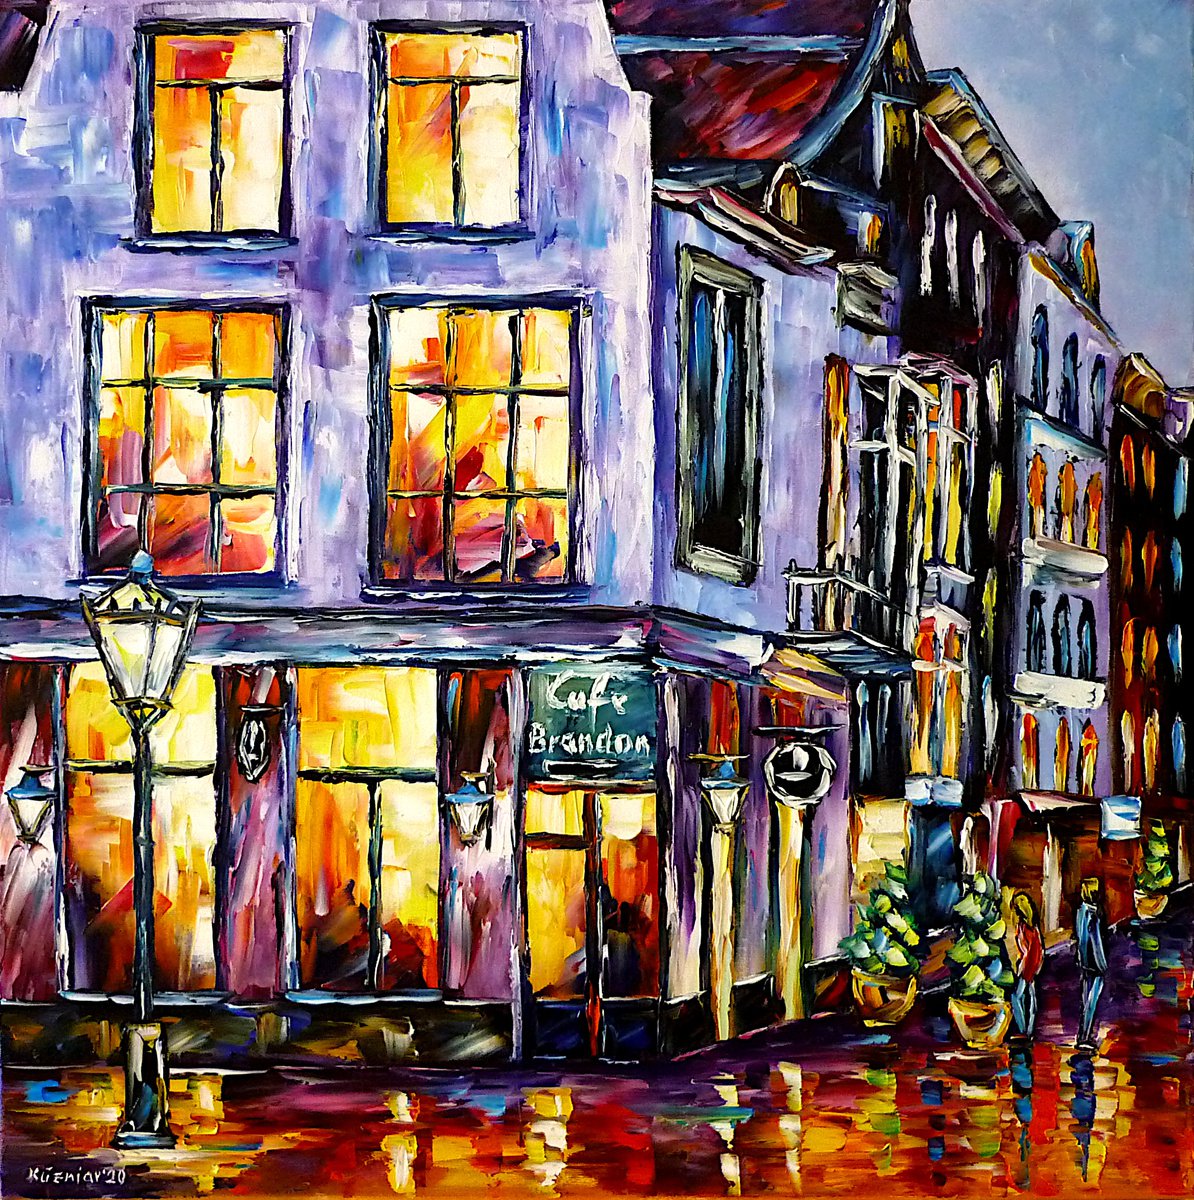 Cafe Brandon, Amsterdam by Mirek Kuzniar